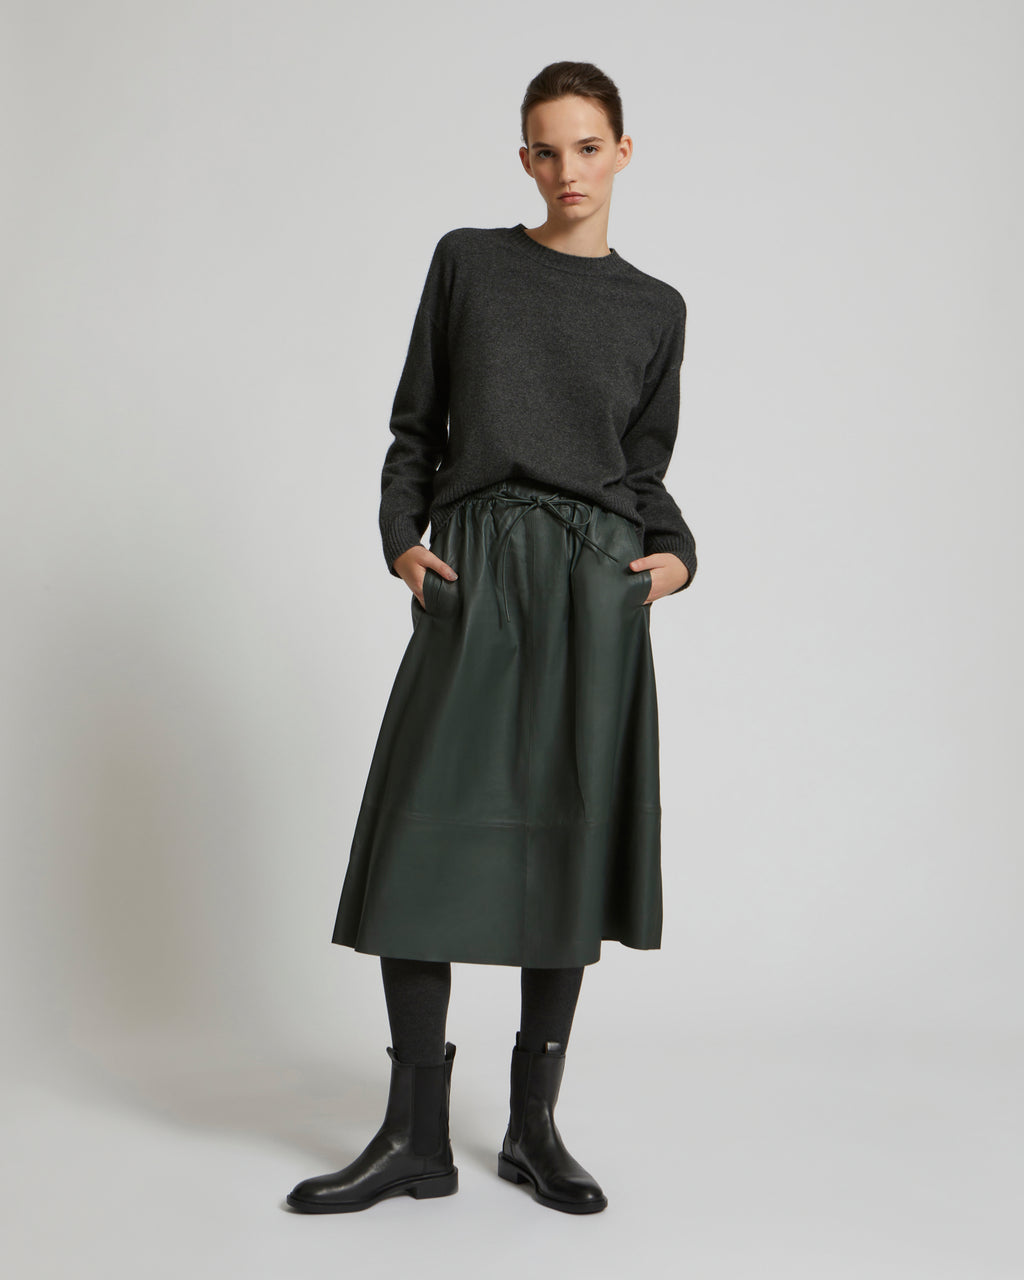 Salomon - - leather Yves khaki skirt Salomon in Yves – lamb Flared US